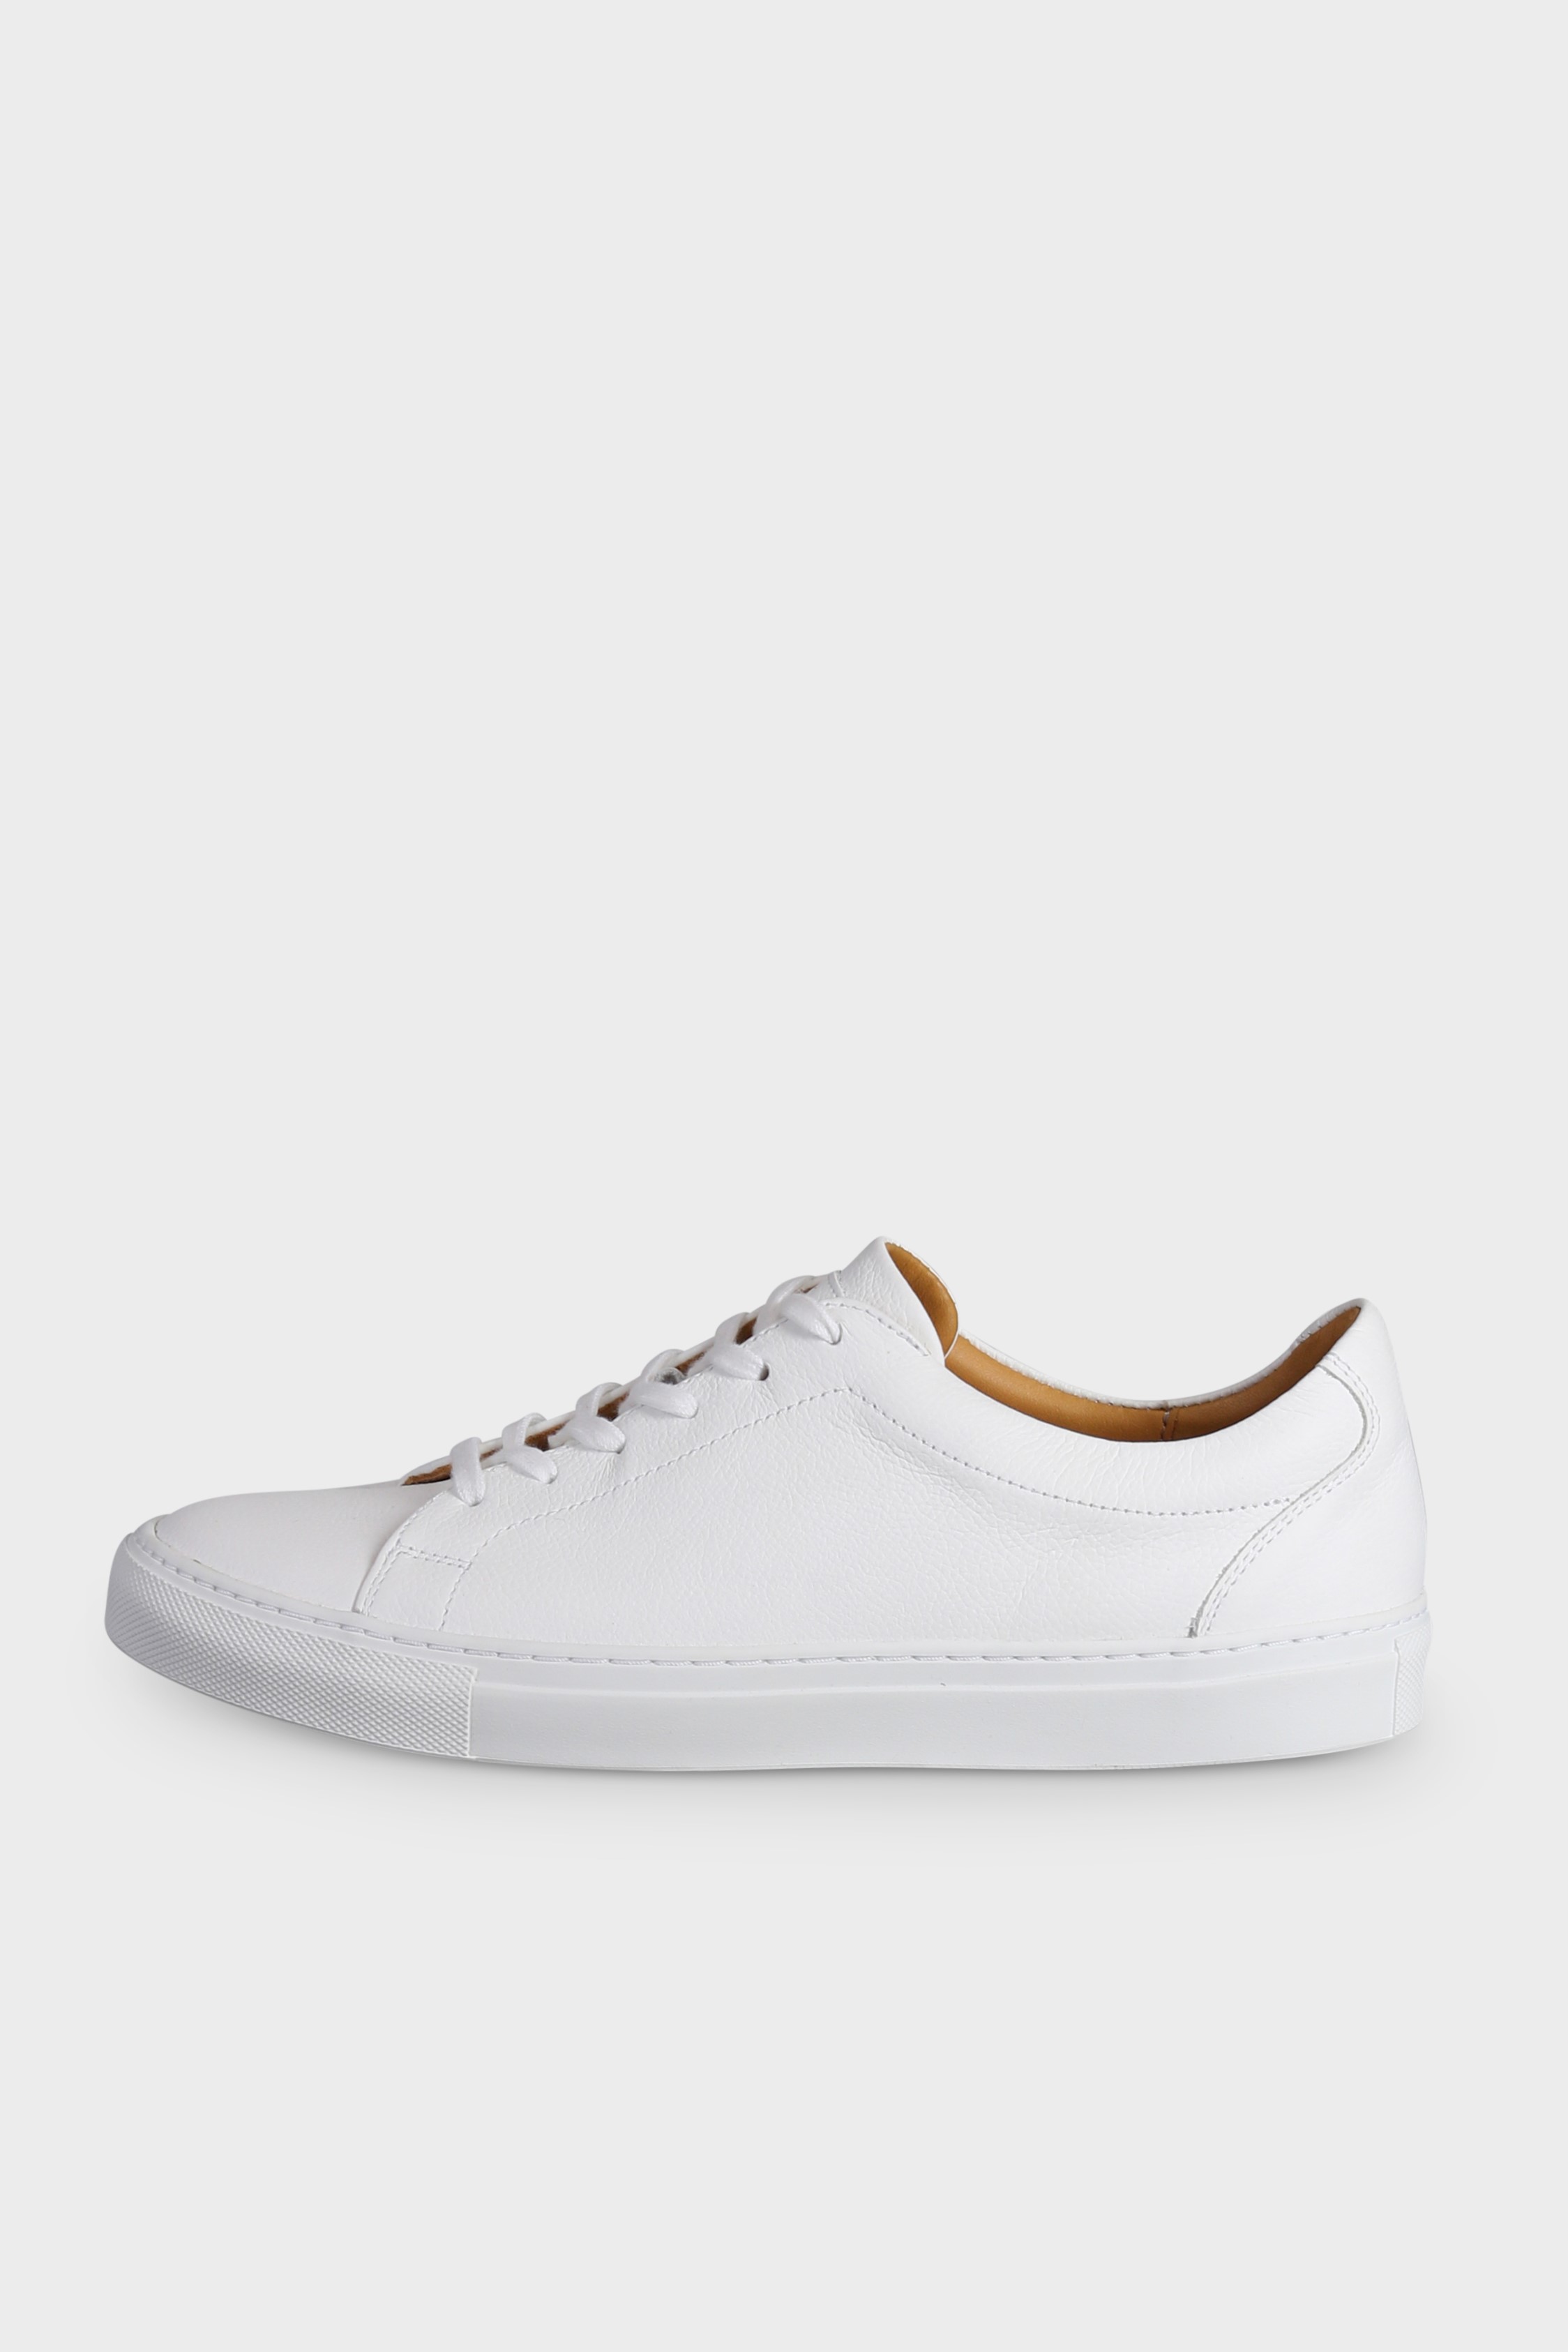 LUDWIG REITER Tennis Sneaker in White 40